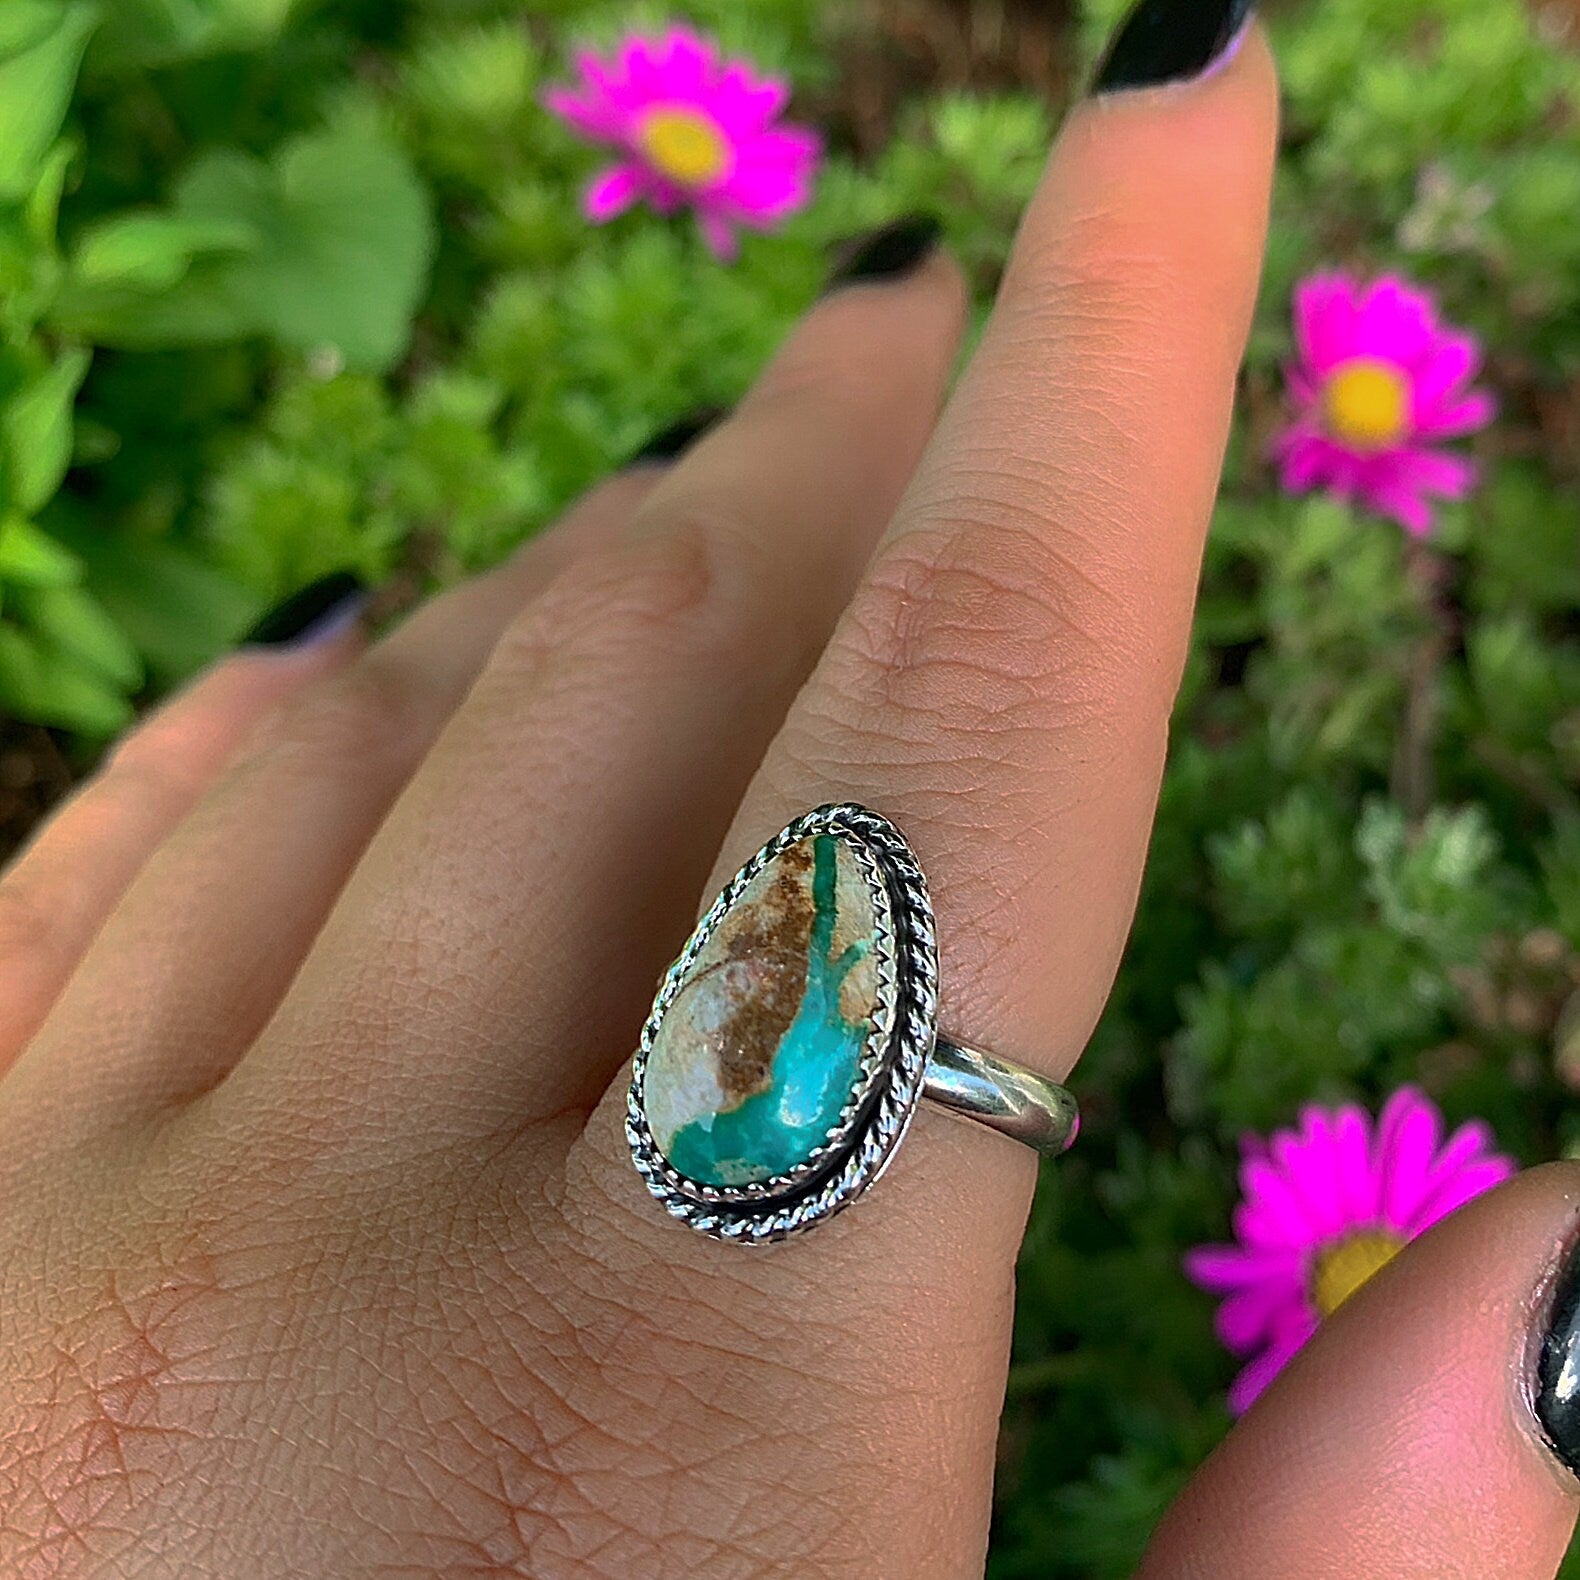 Stone Mountain Ribbon Turquoise Ring - Size 8 - Sterling Silver - Stone Mountain Turquoise Jewelry, Genuine Turquoise Ring, Nevada Turquoise